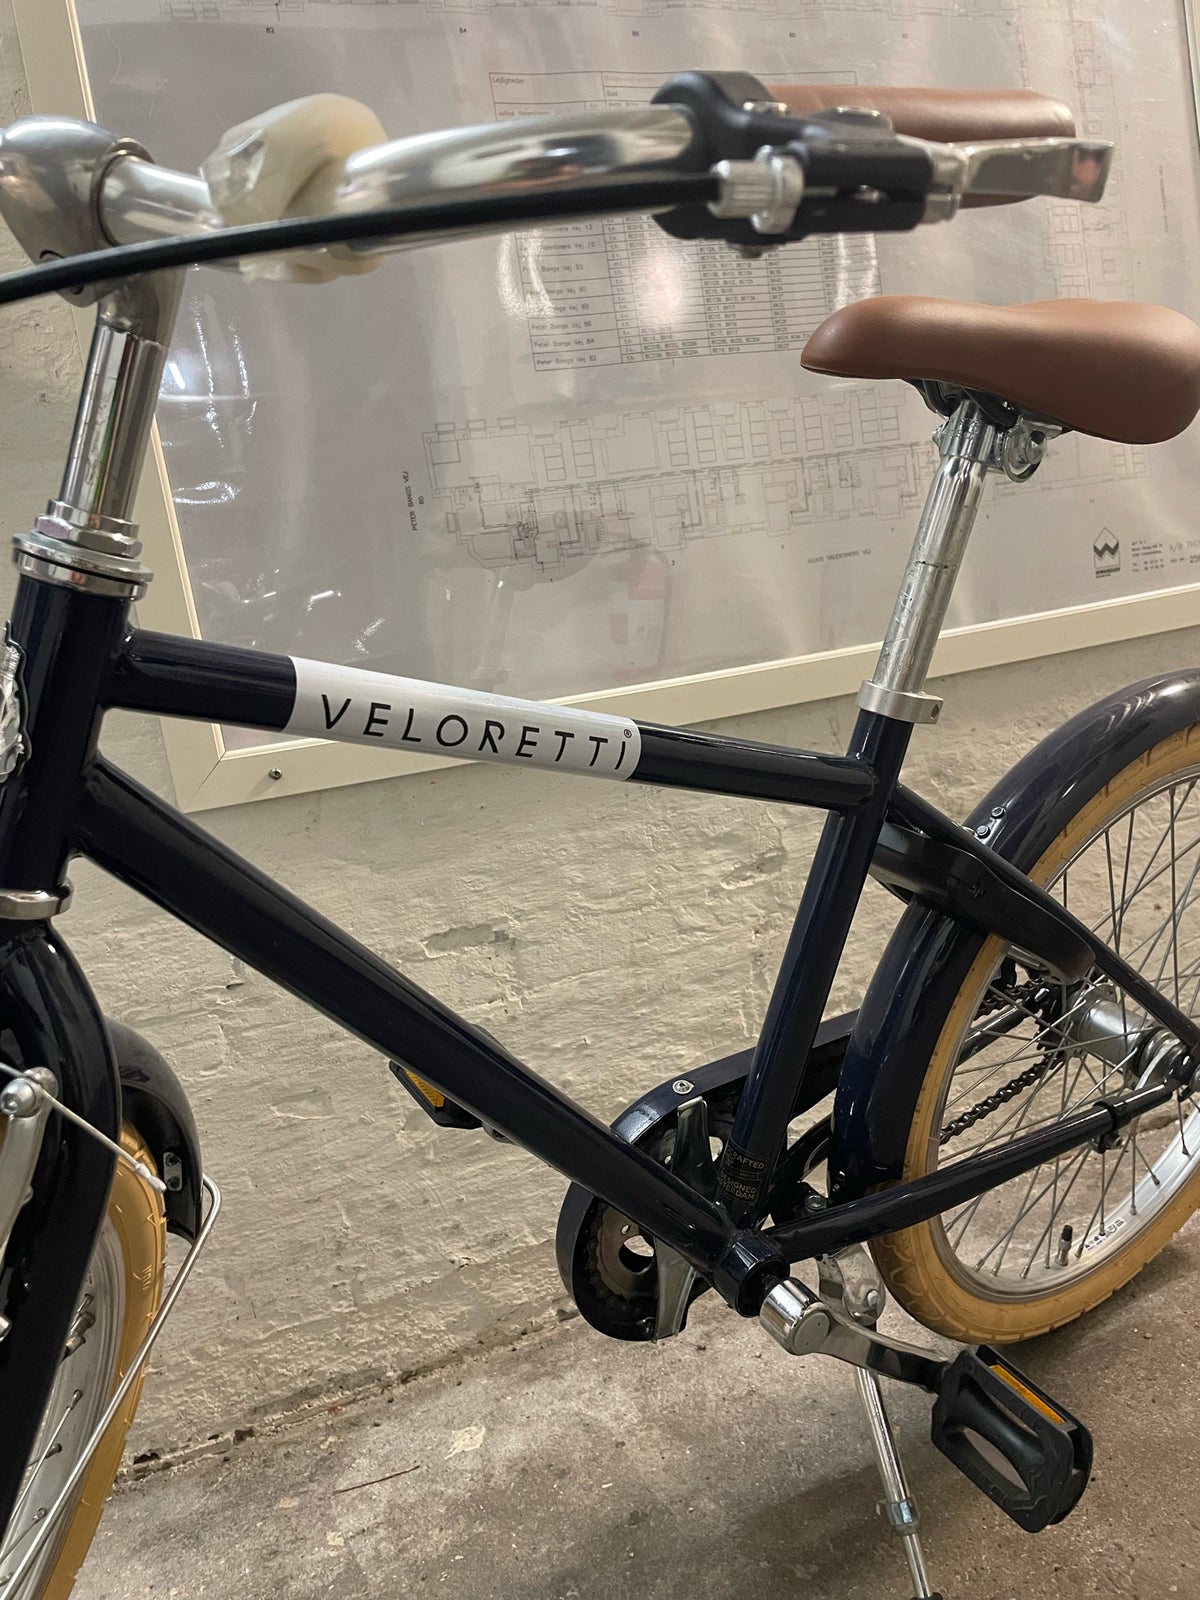 Drengecykel, classic cykel, andet mærke